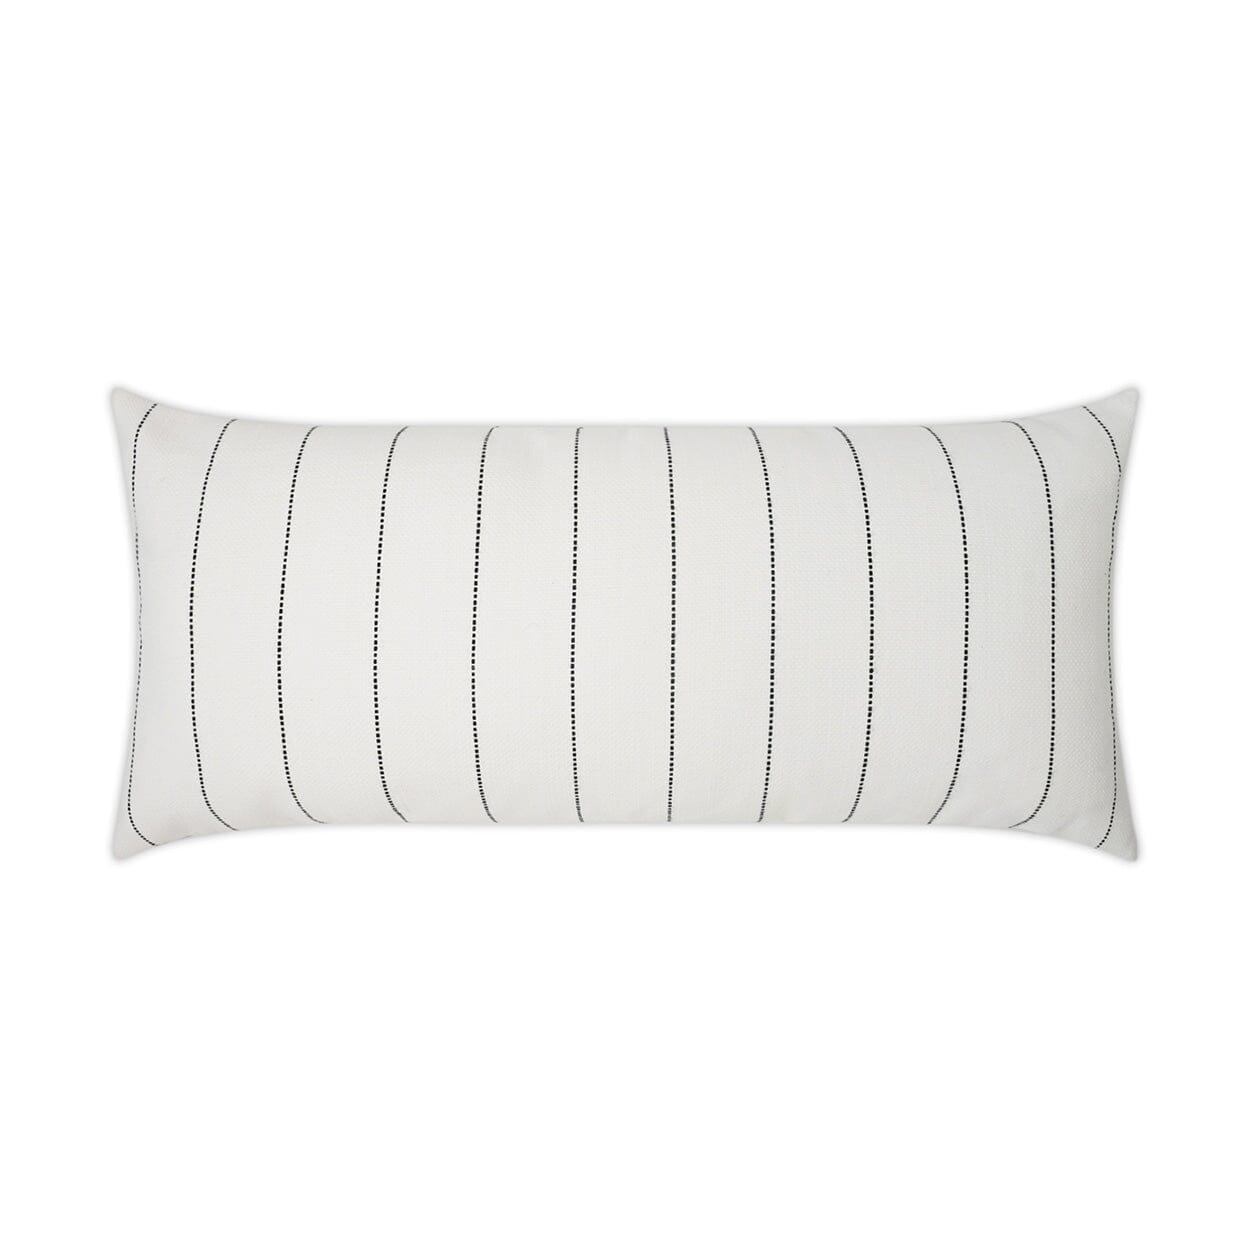 D.V. Kap 12" x 24" Outdoor Lumbar Pillow | Malibu White Pillows D.V Kap Outdoor